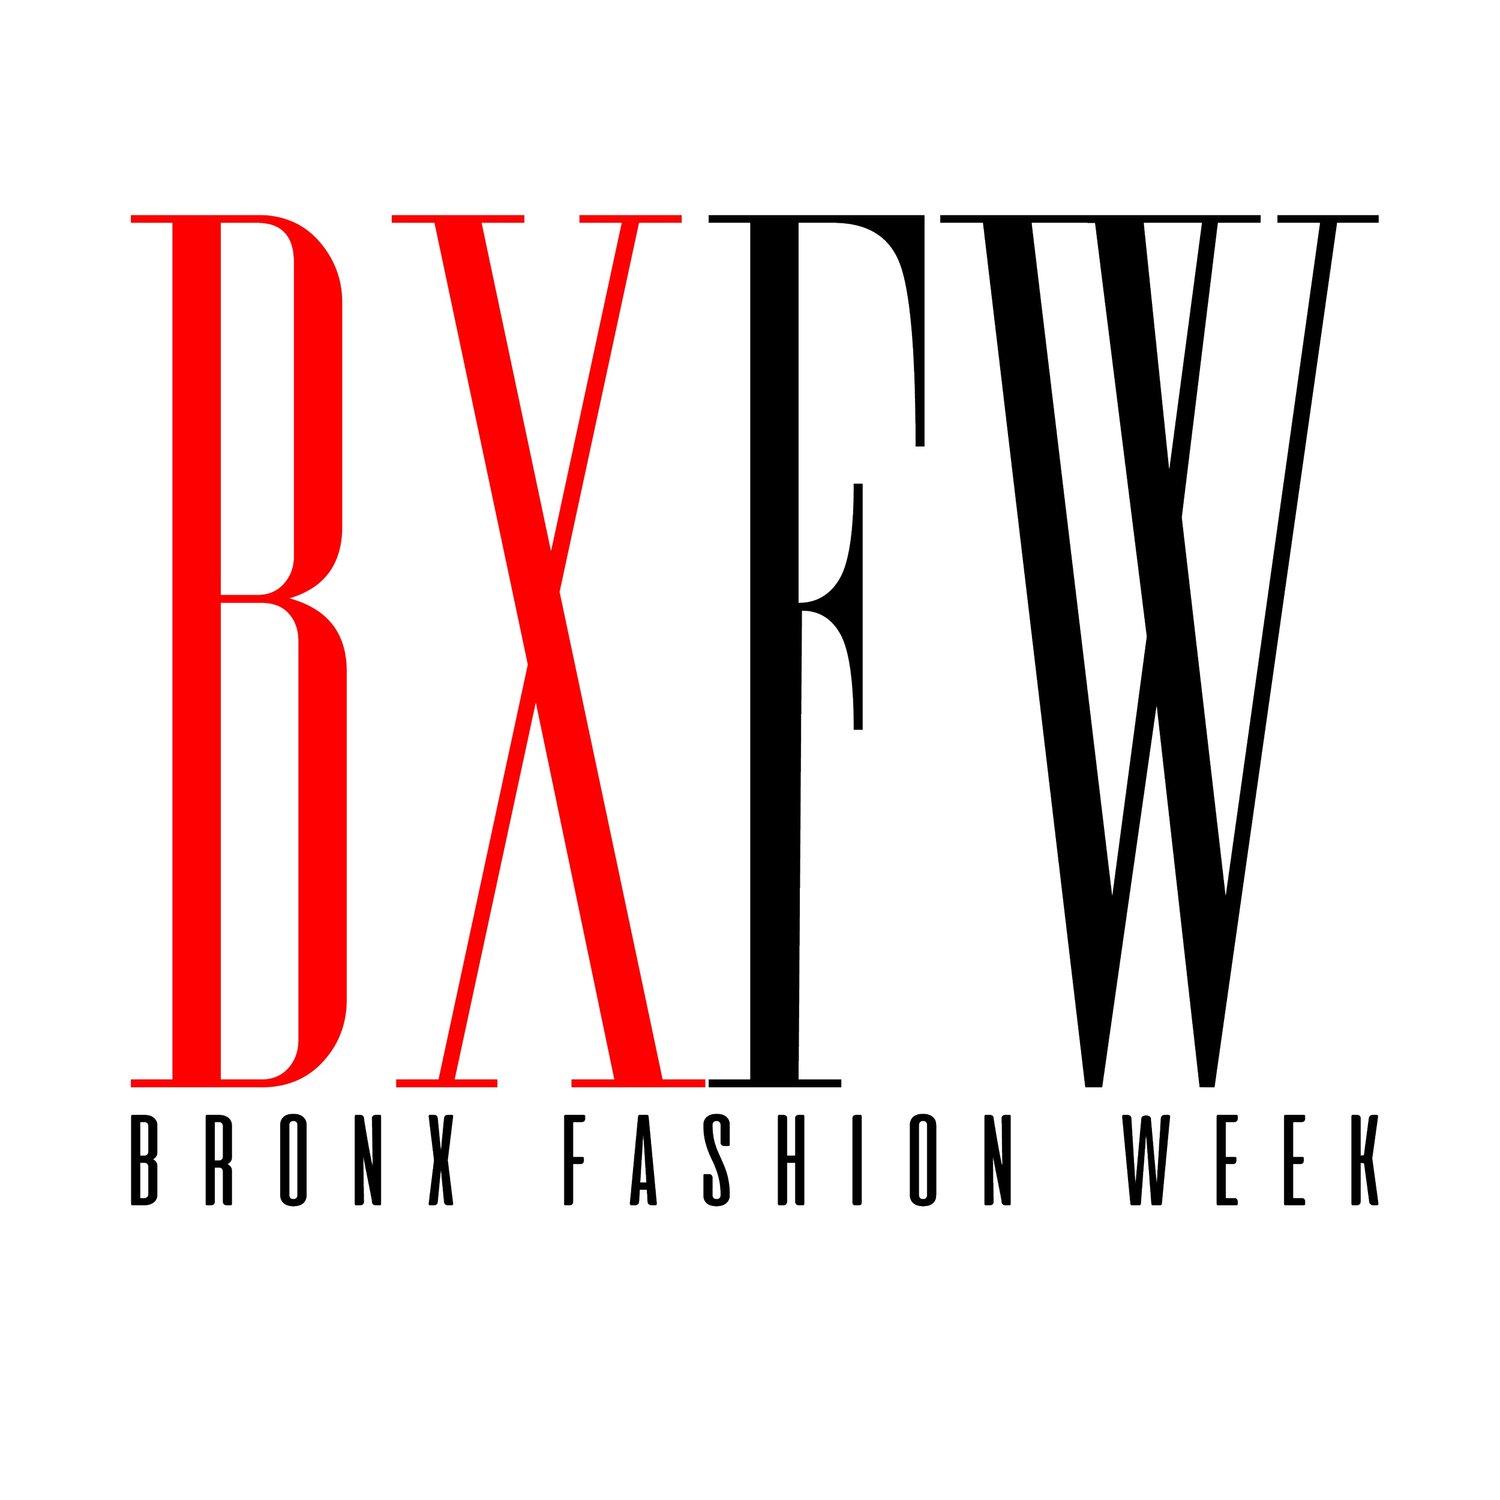 Bronx Fashion Week